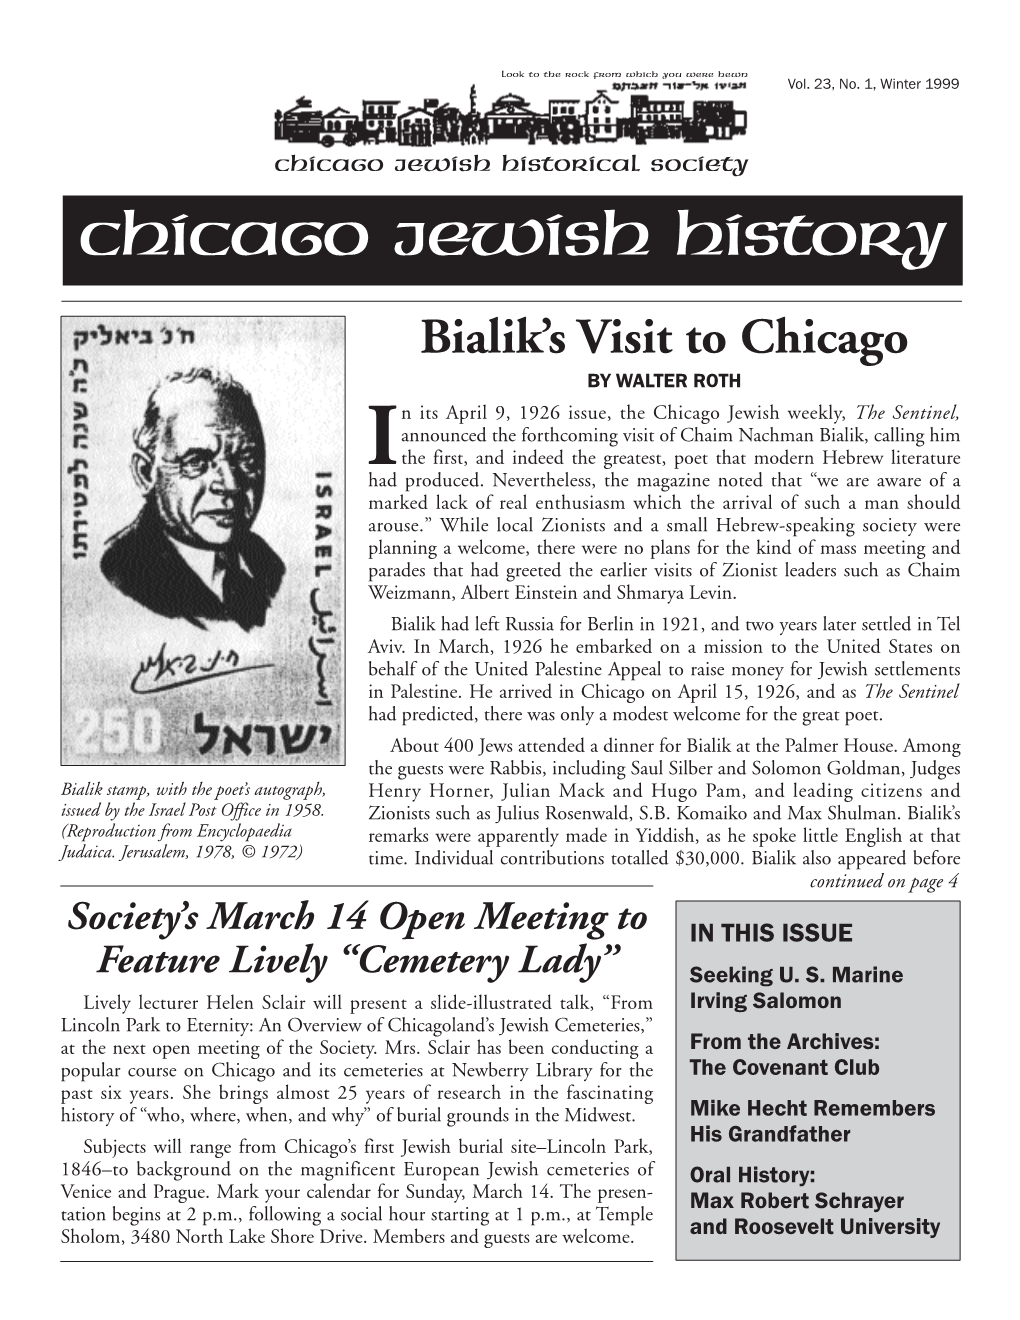 Chicago Jewish History